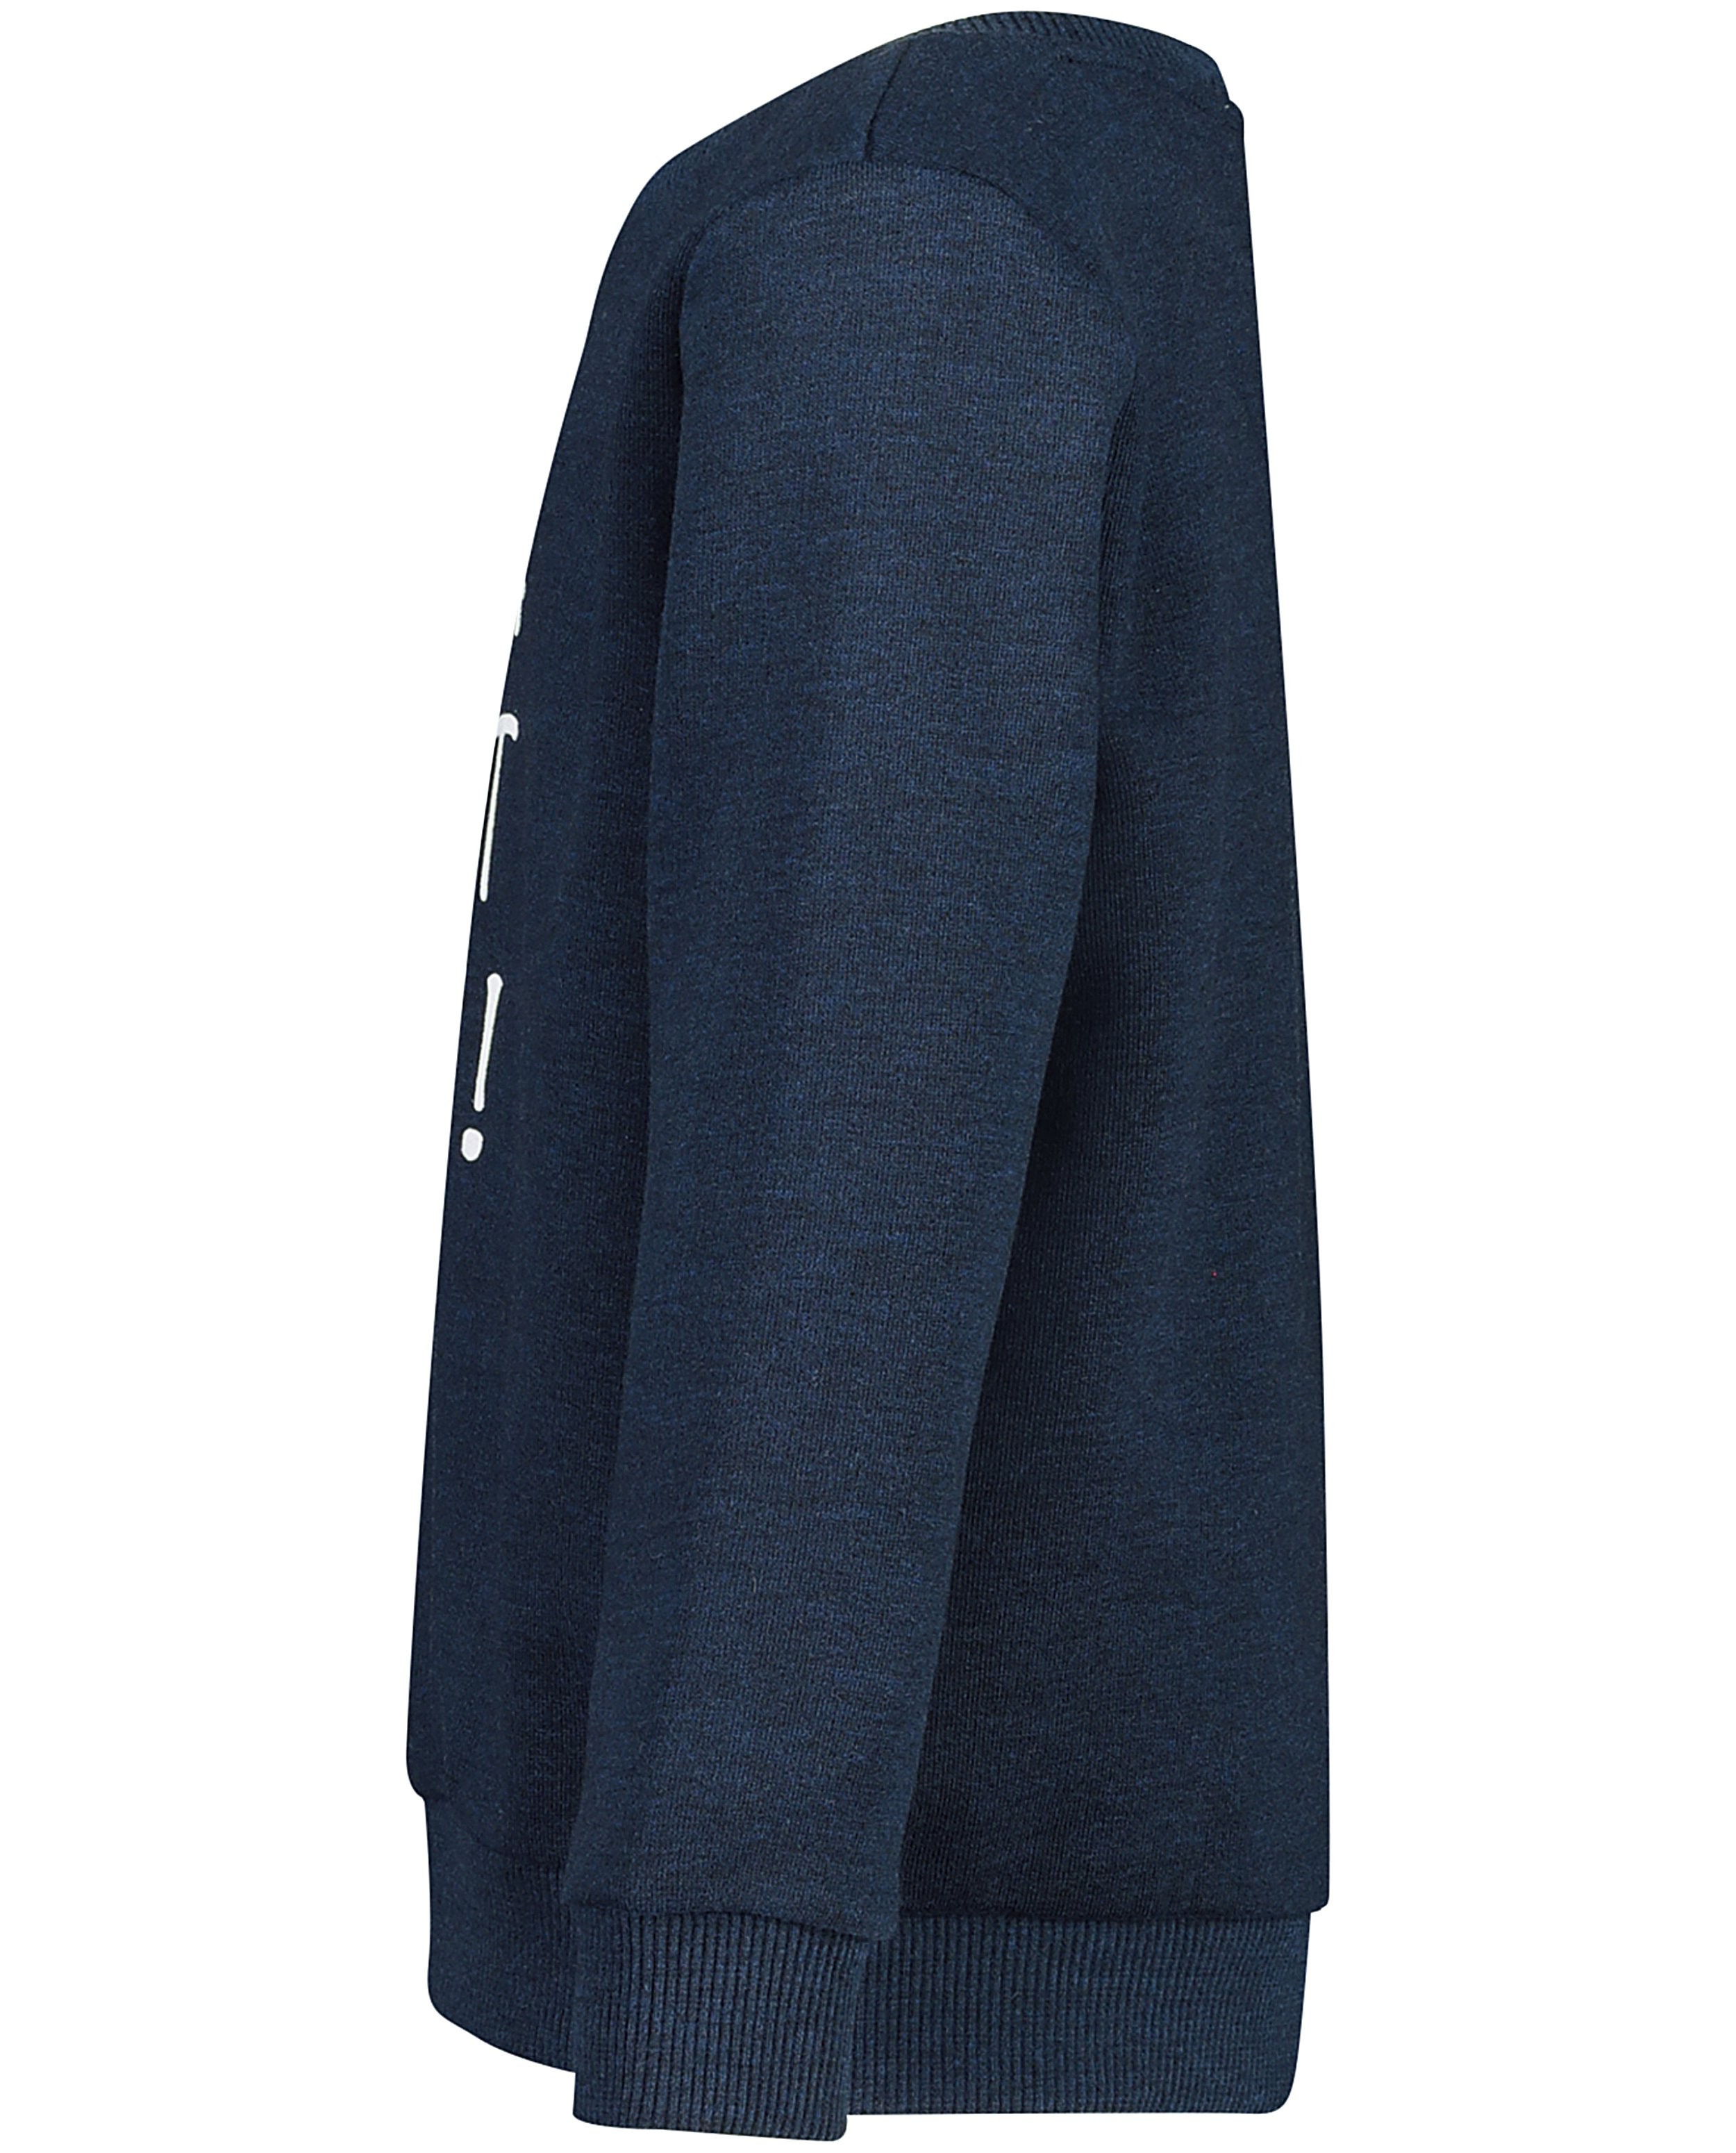 Sweaters - Blauwe unisex sweater, 2-7 jaar